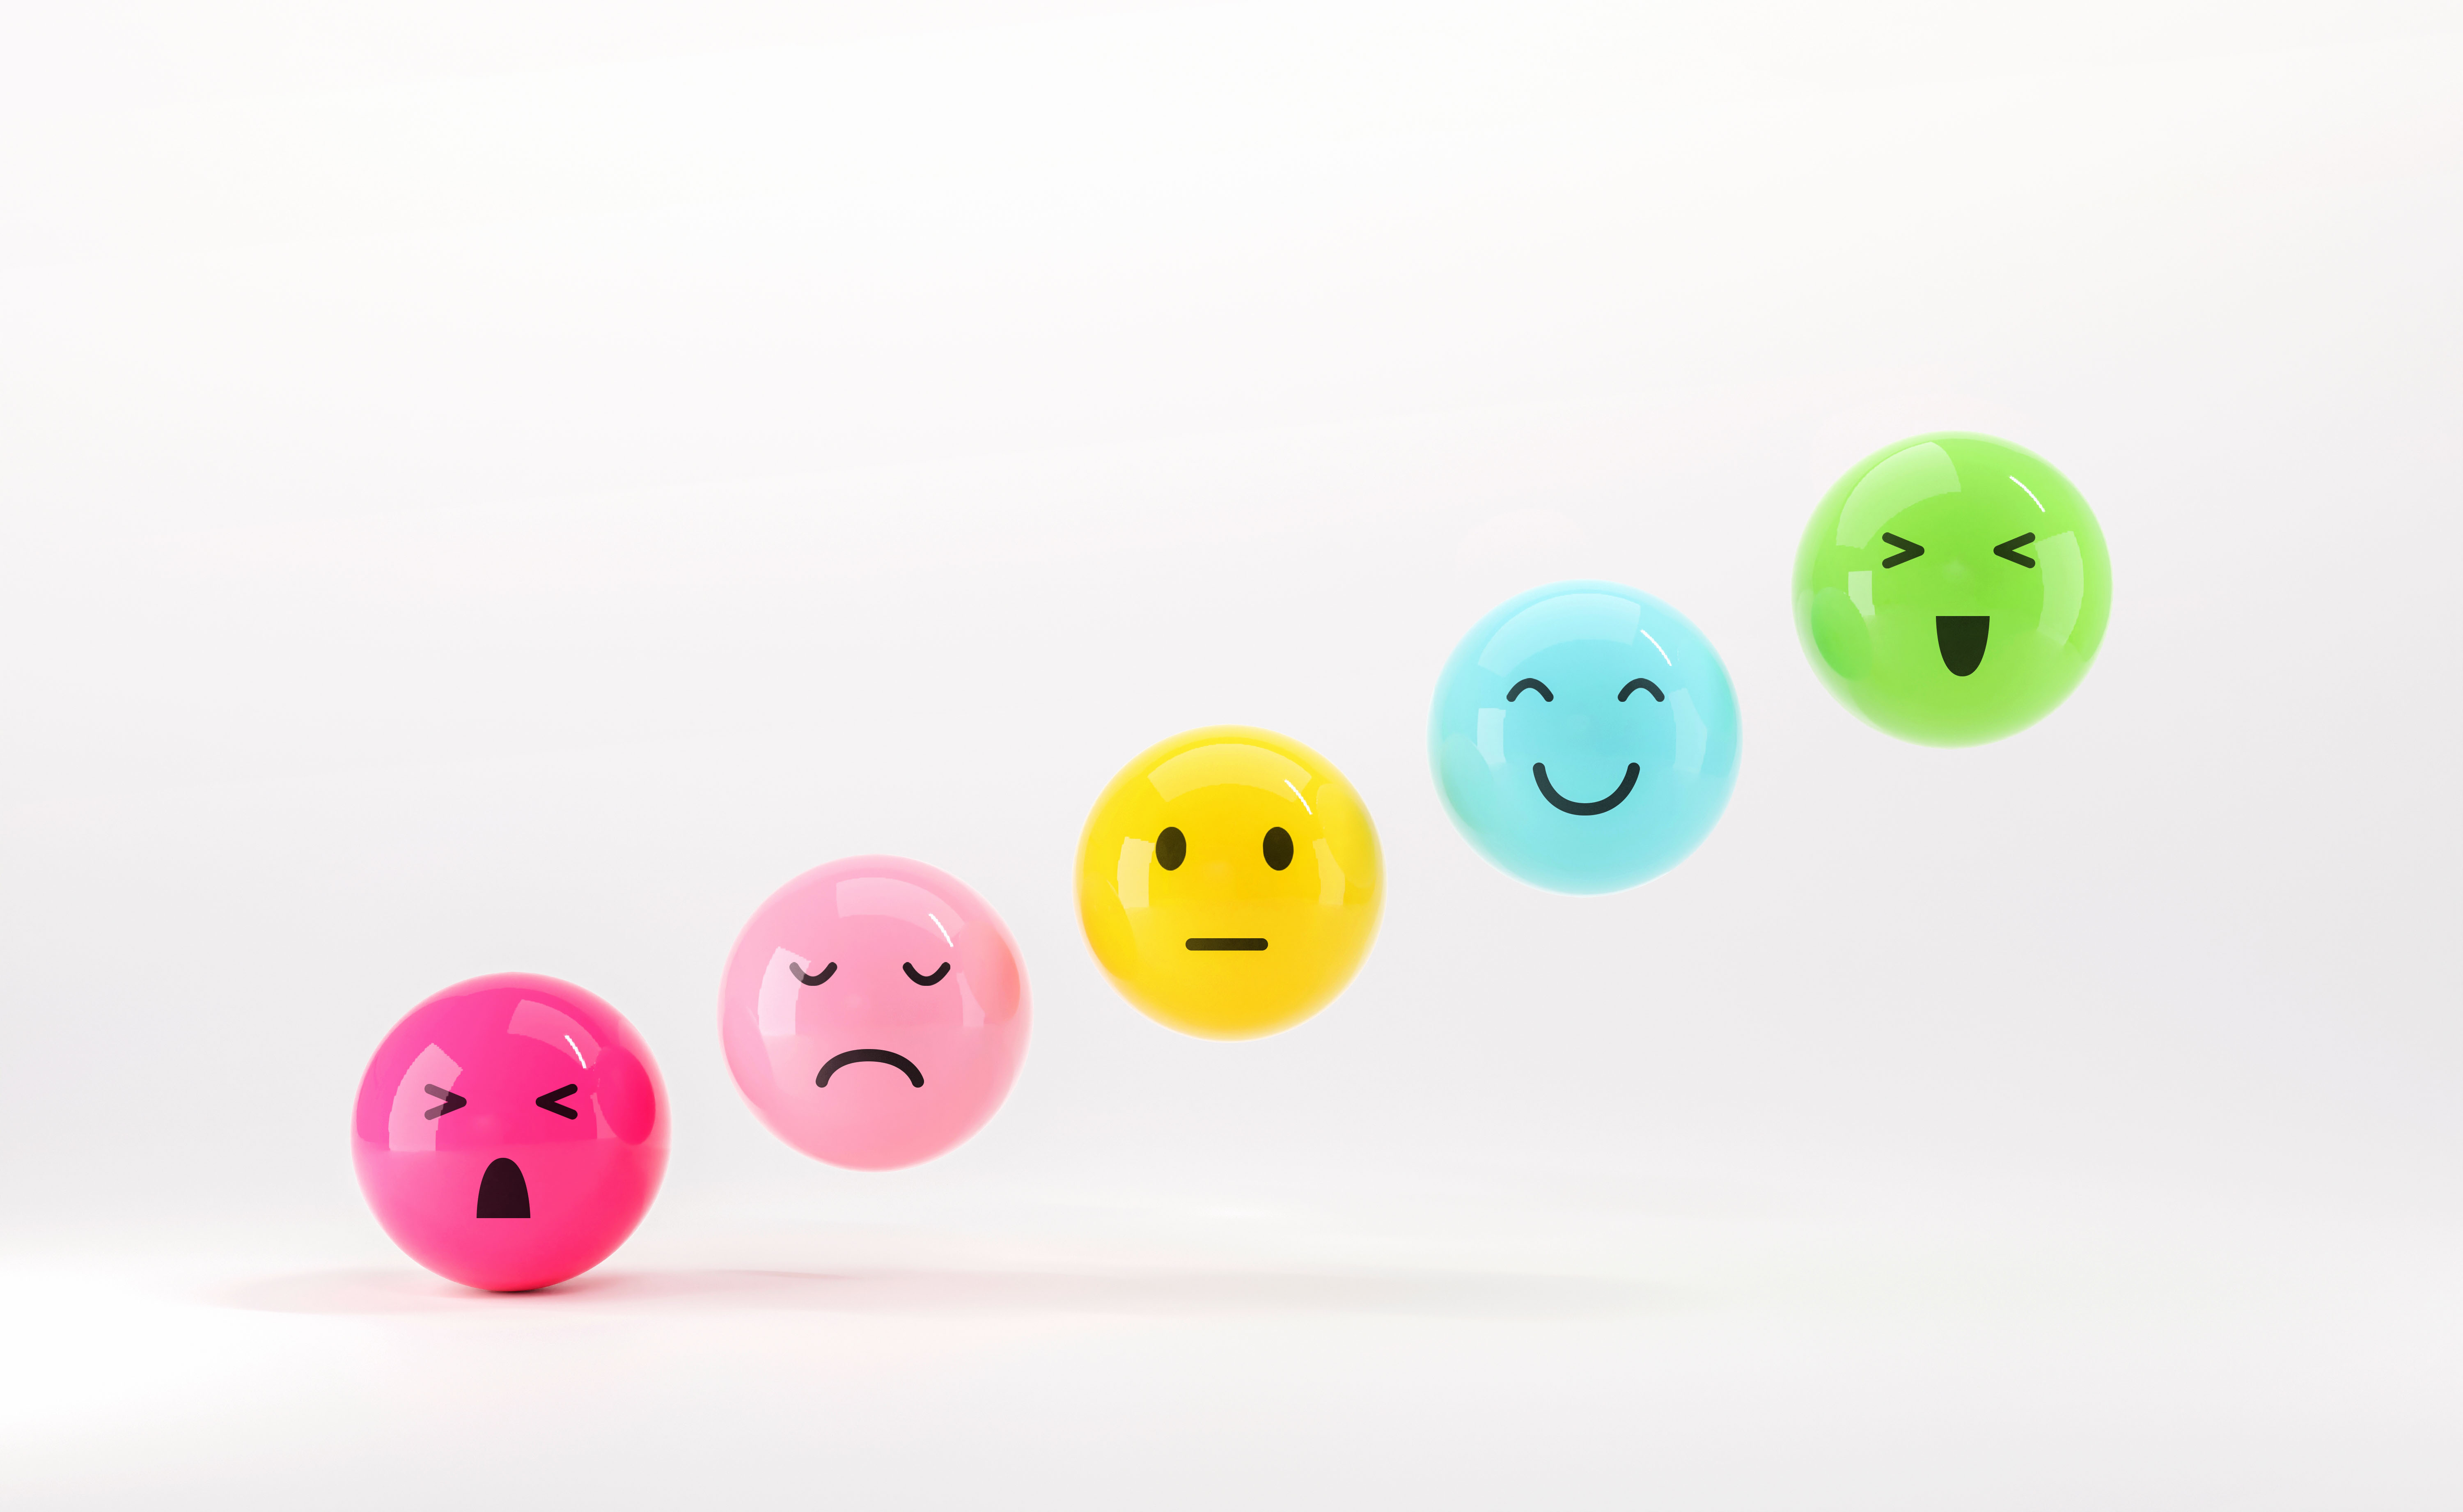 Rainbow Emojis Rating Scale